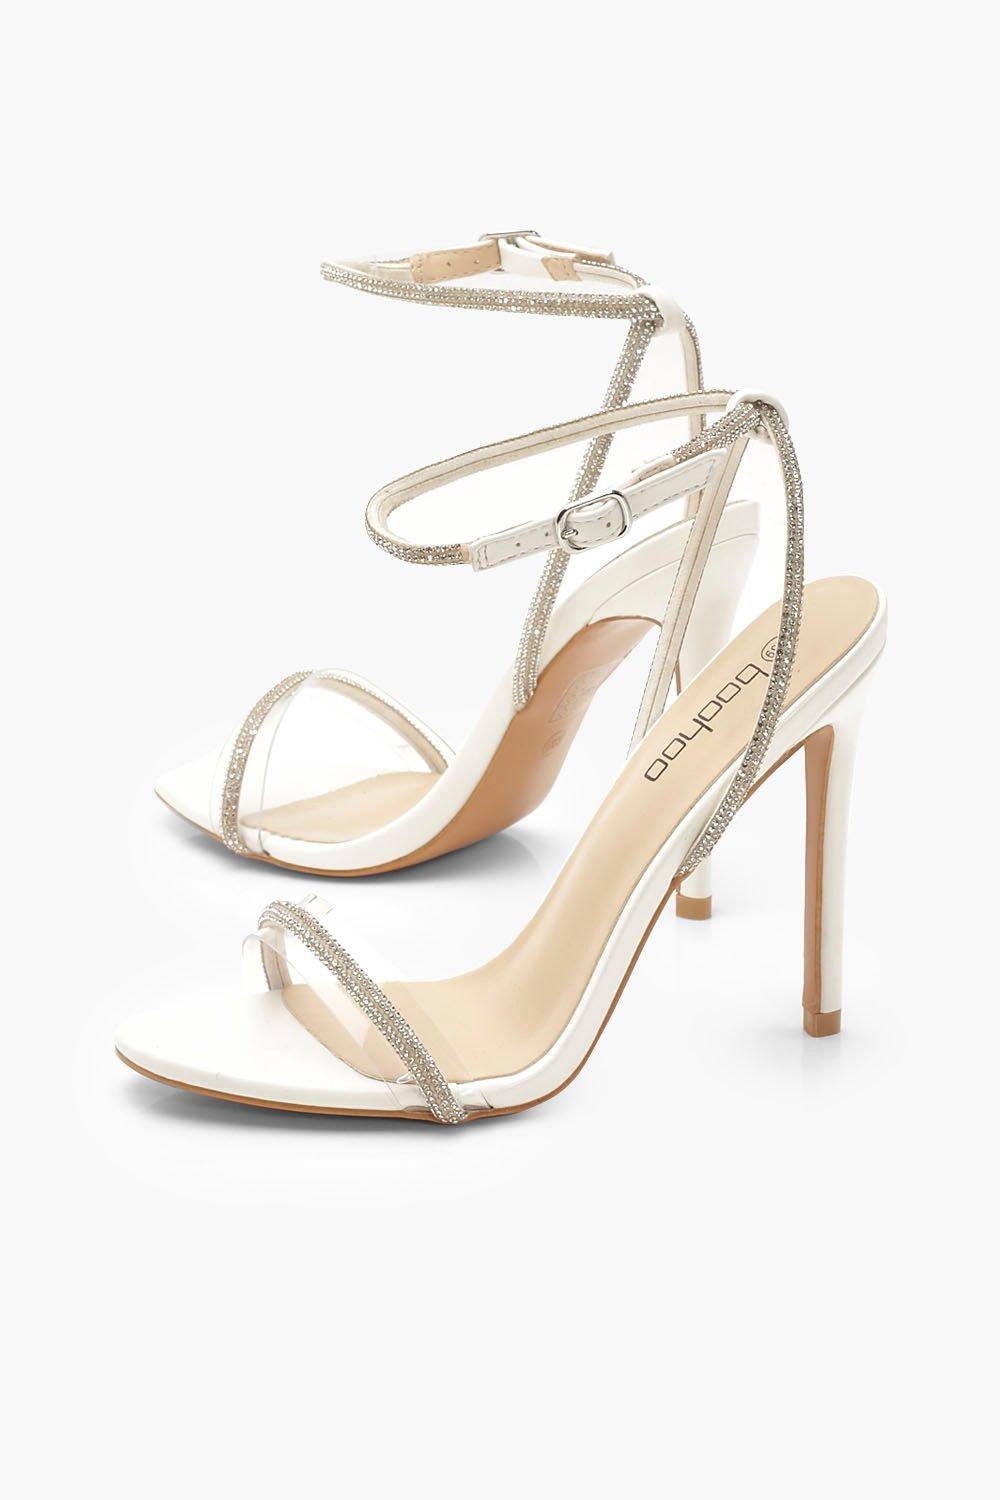 boohoo white heels